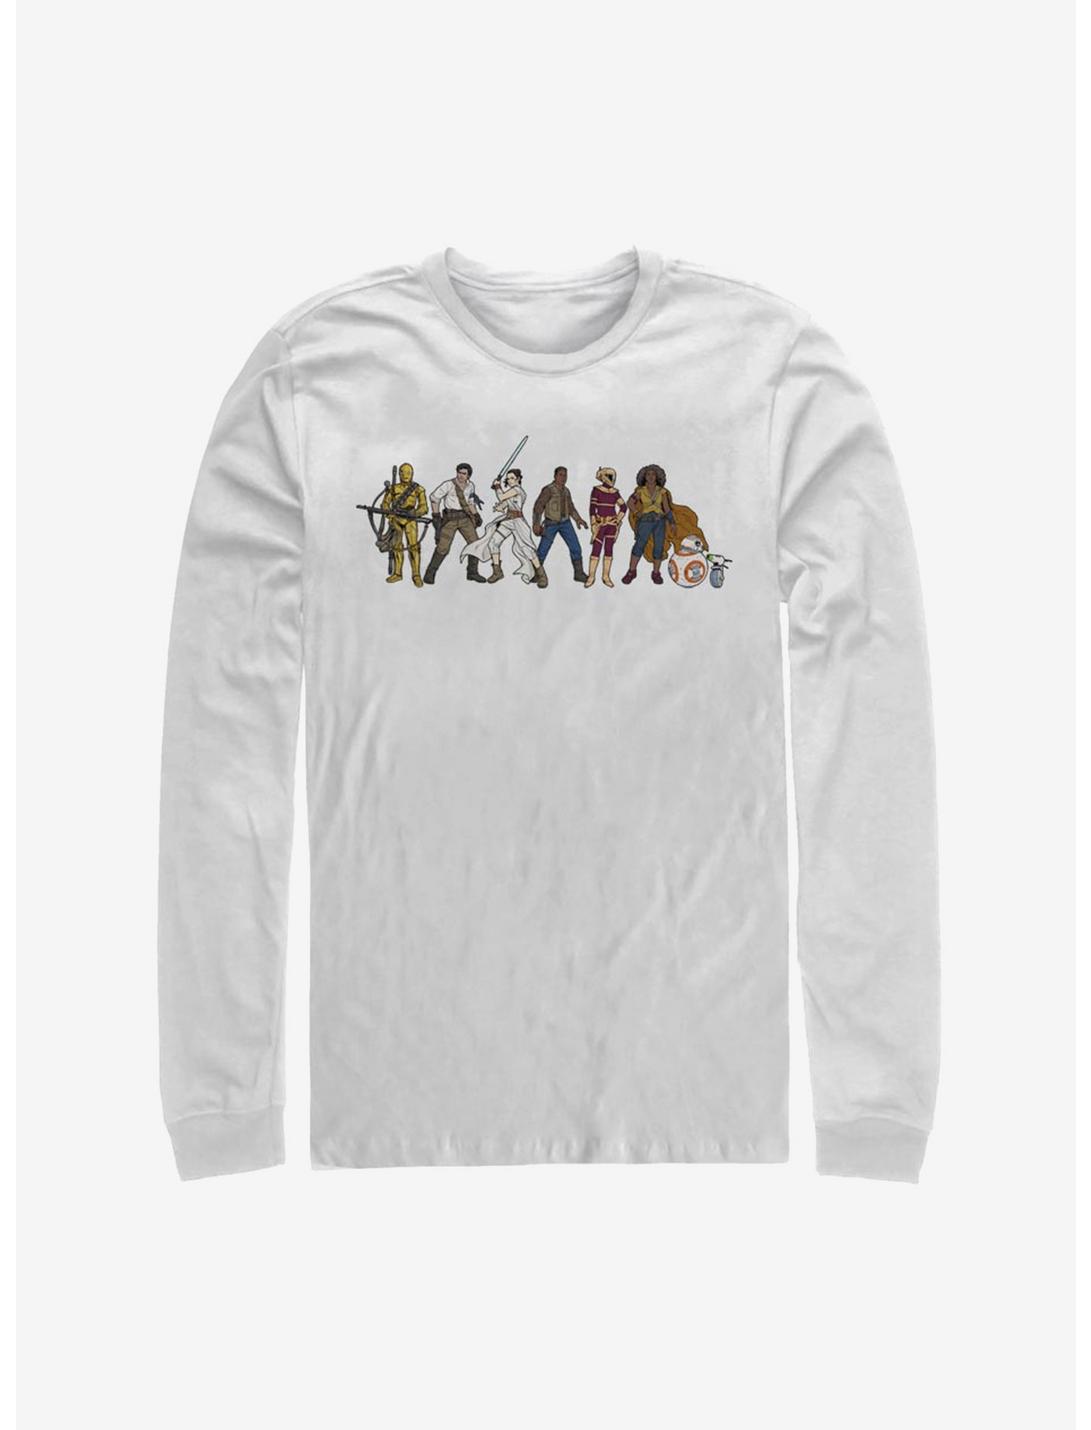 Star Wars Episode IX The Rise Of Skywalker Resistance Lineup Long-Sleeve T-Shirt, WHITE, hi-res